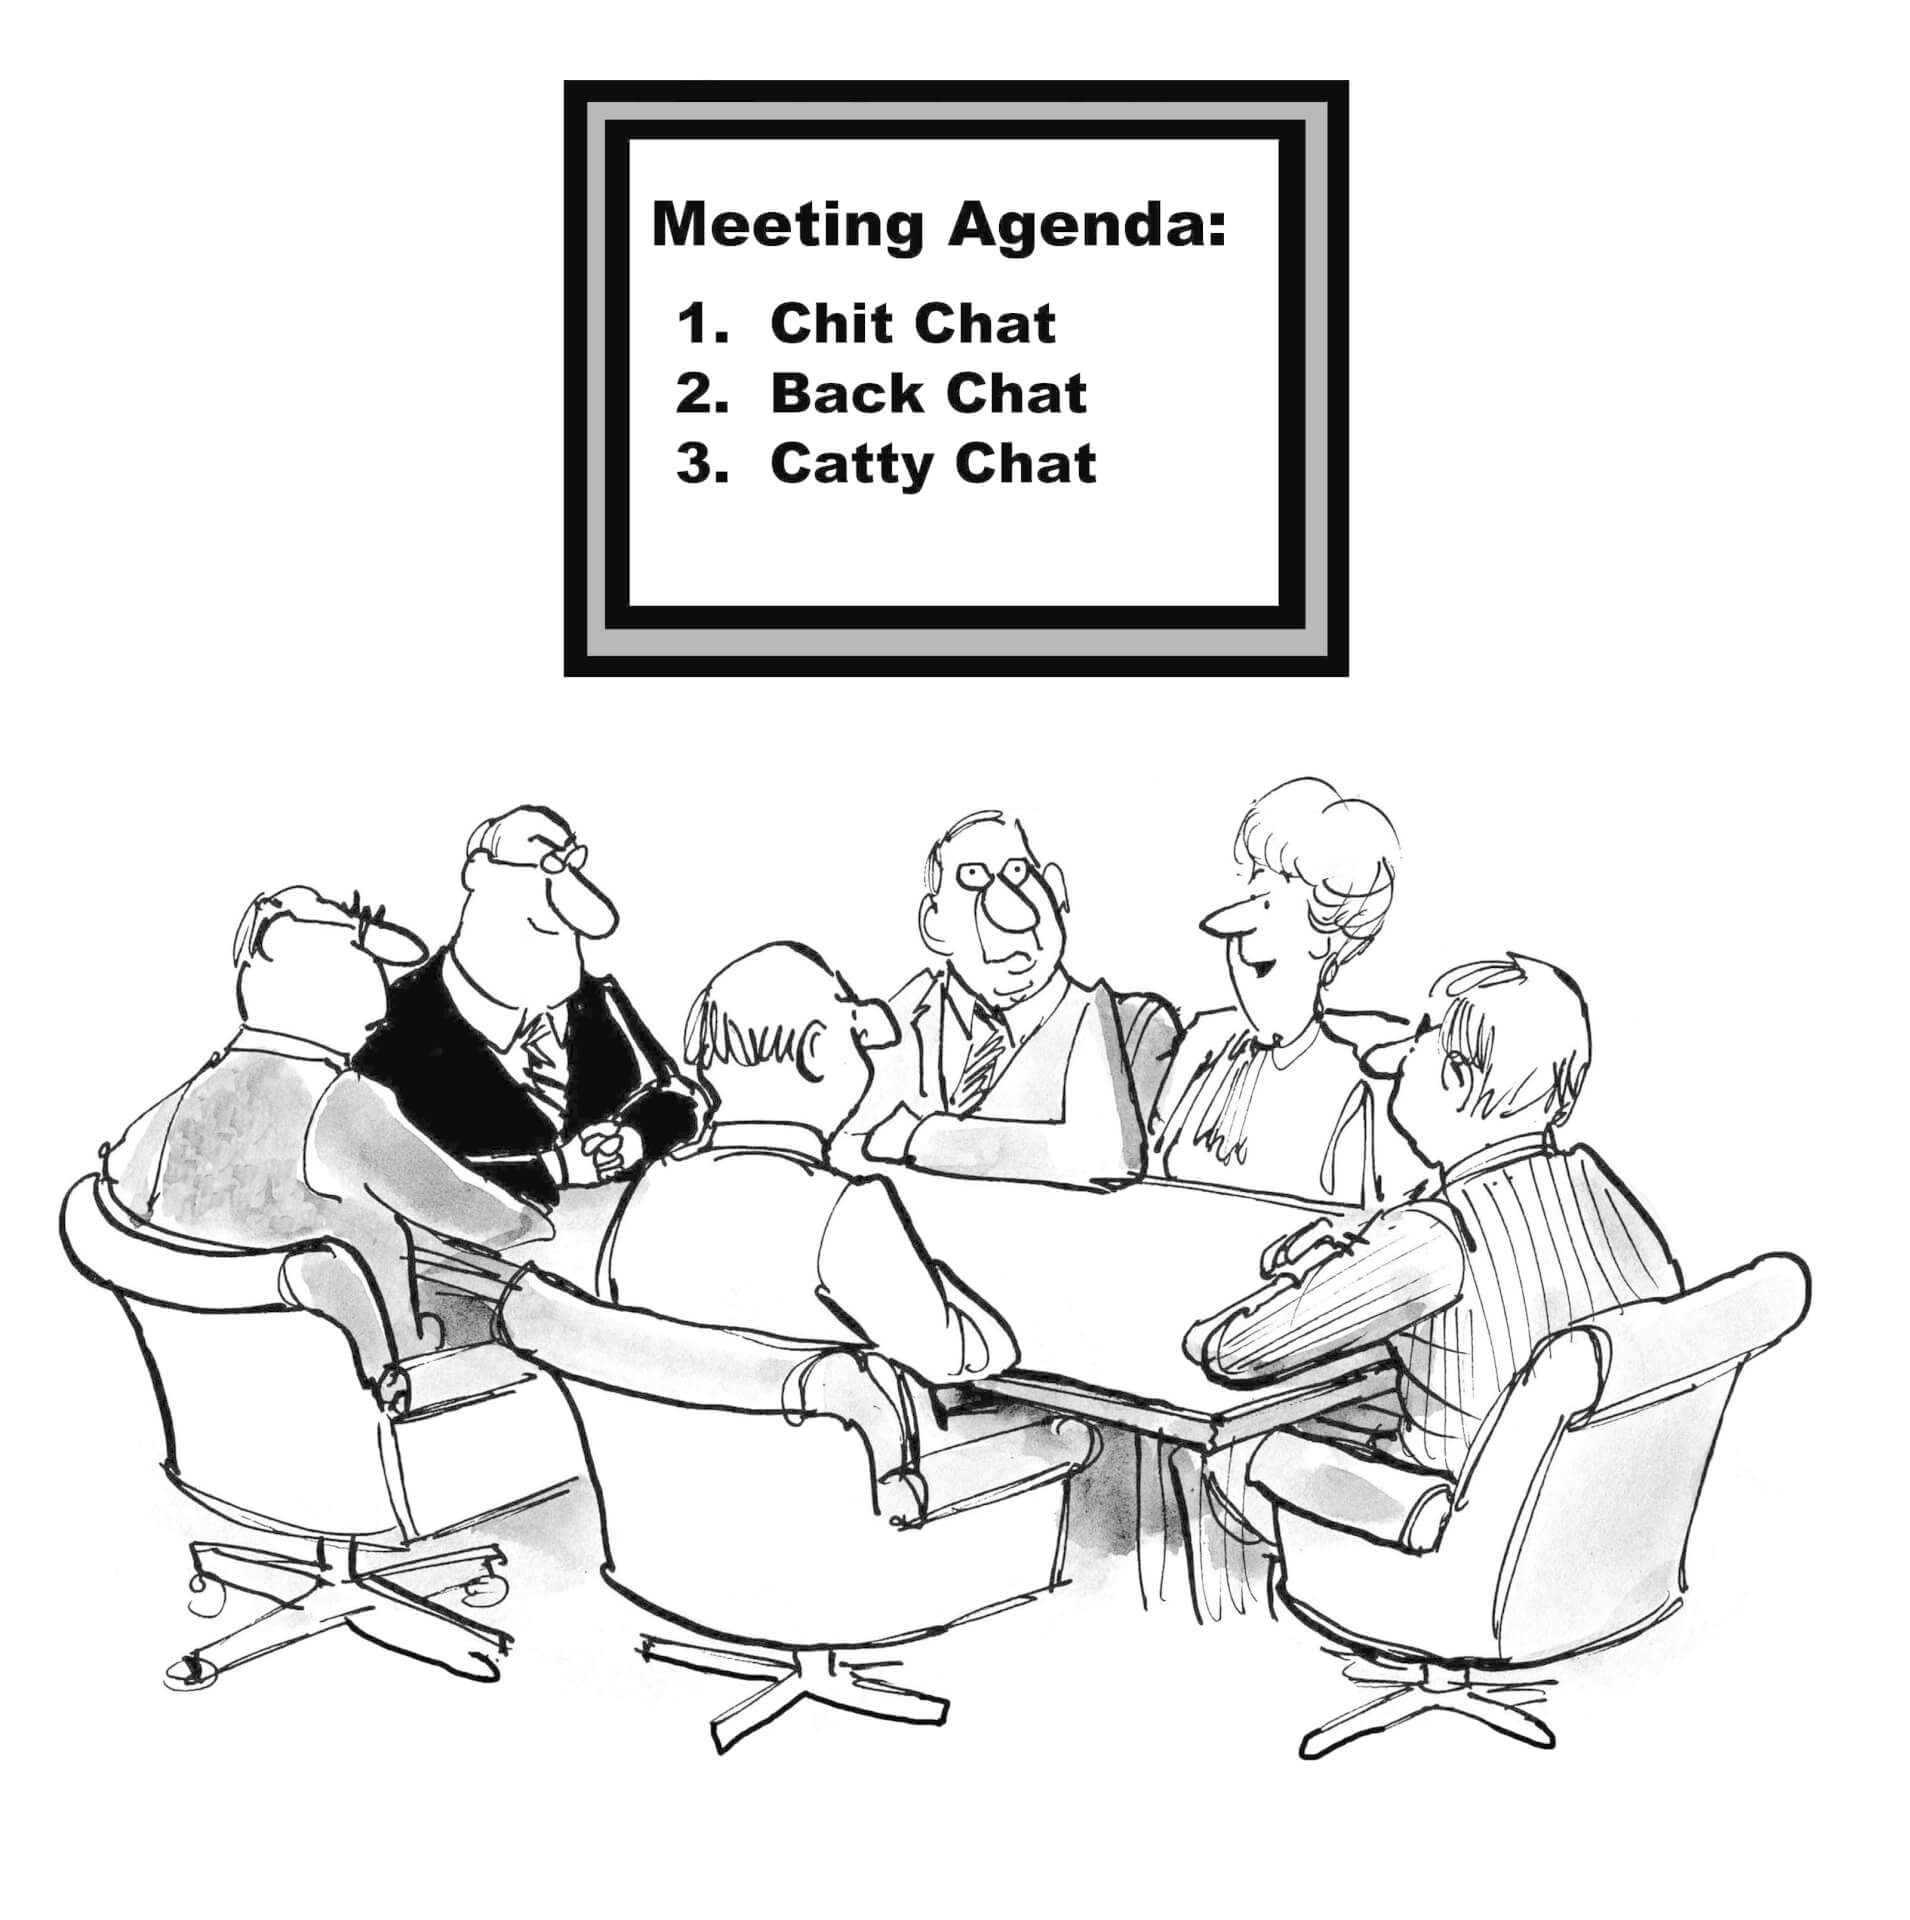 Meetings Matter